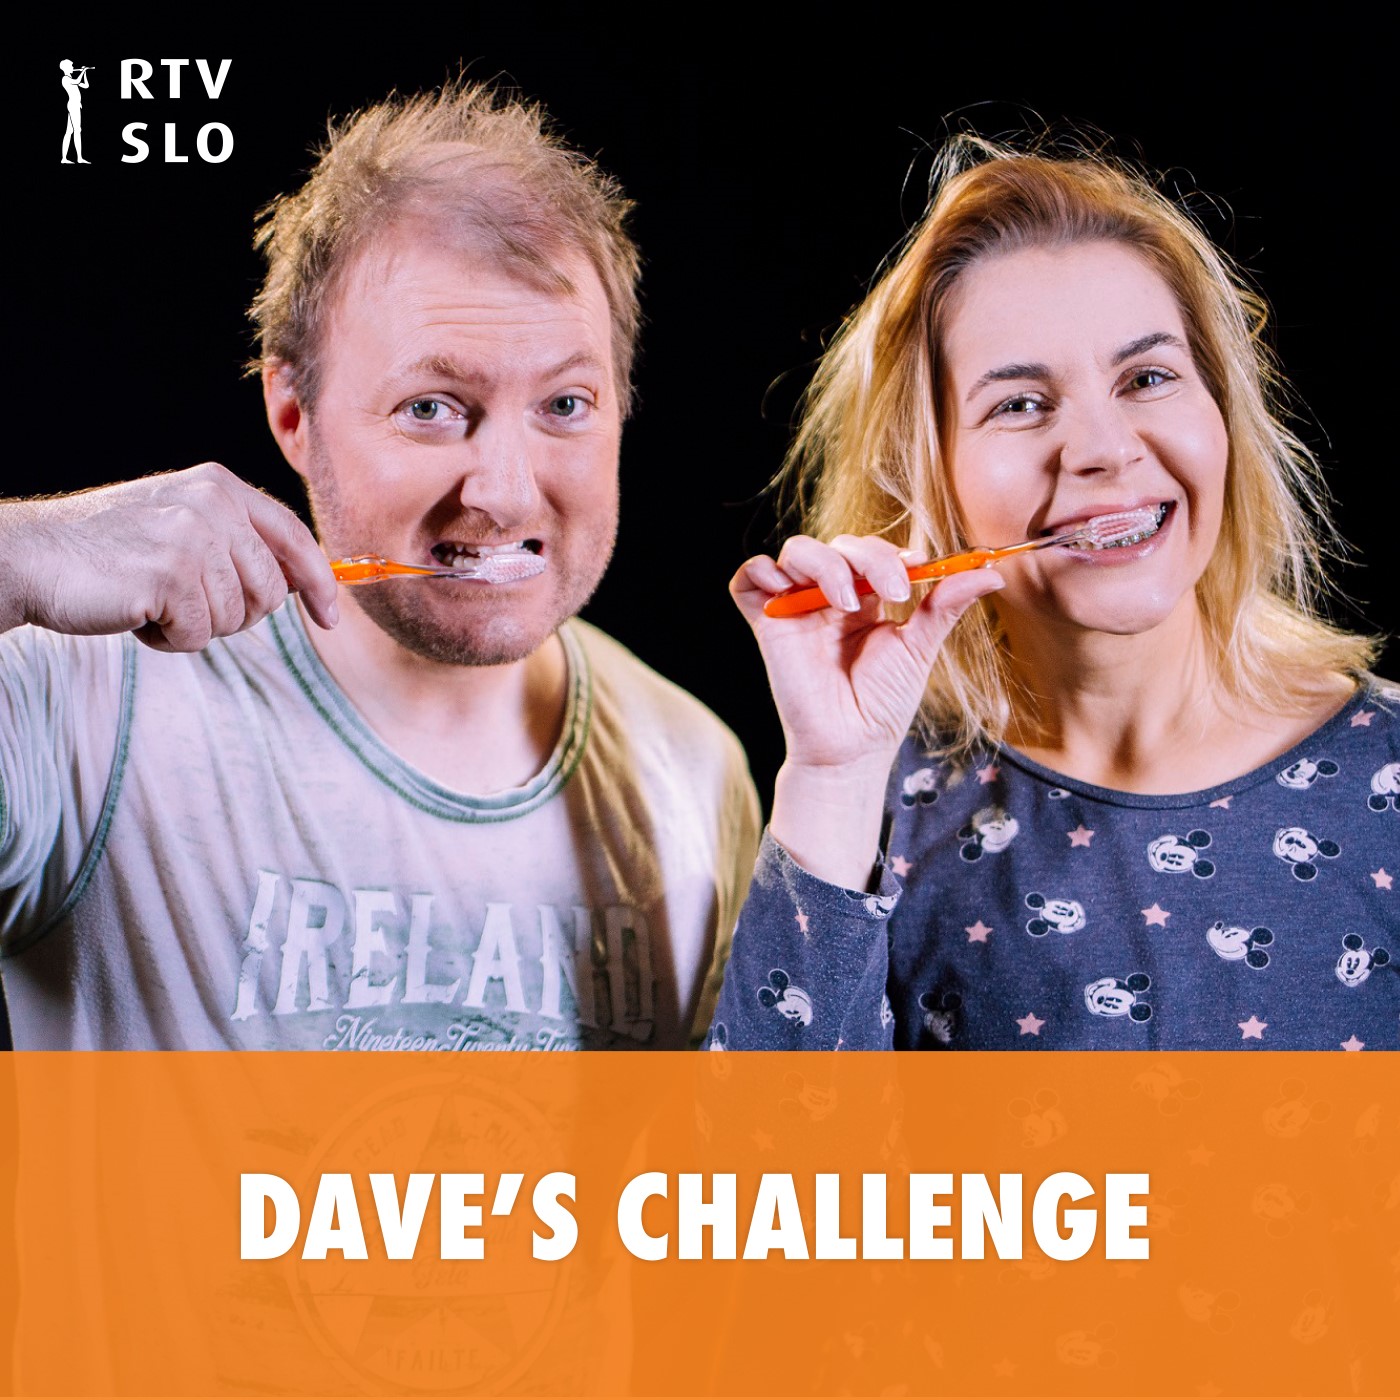 Dave's challenge: Let's learn Slovene